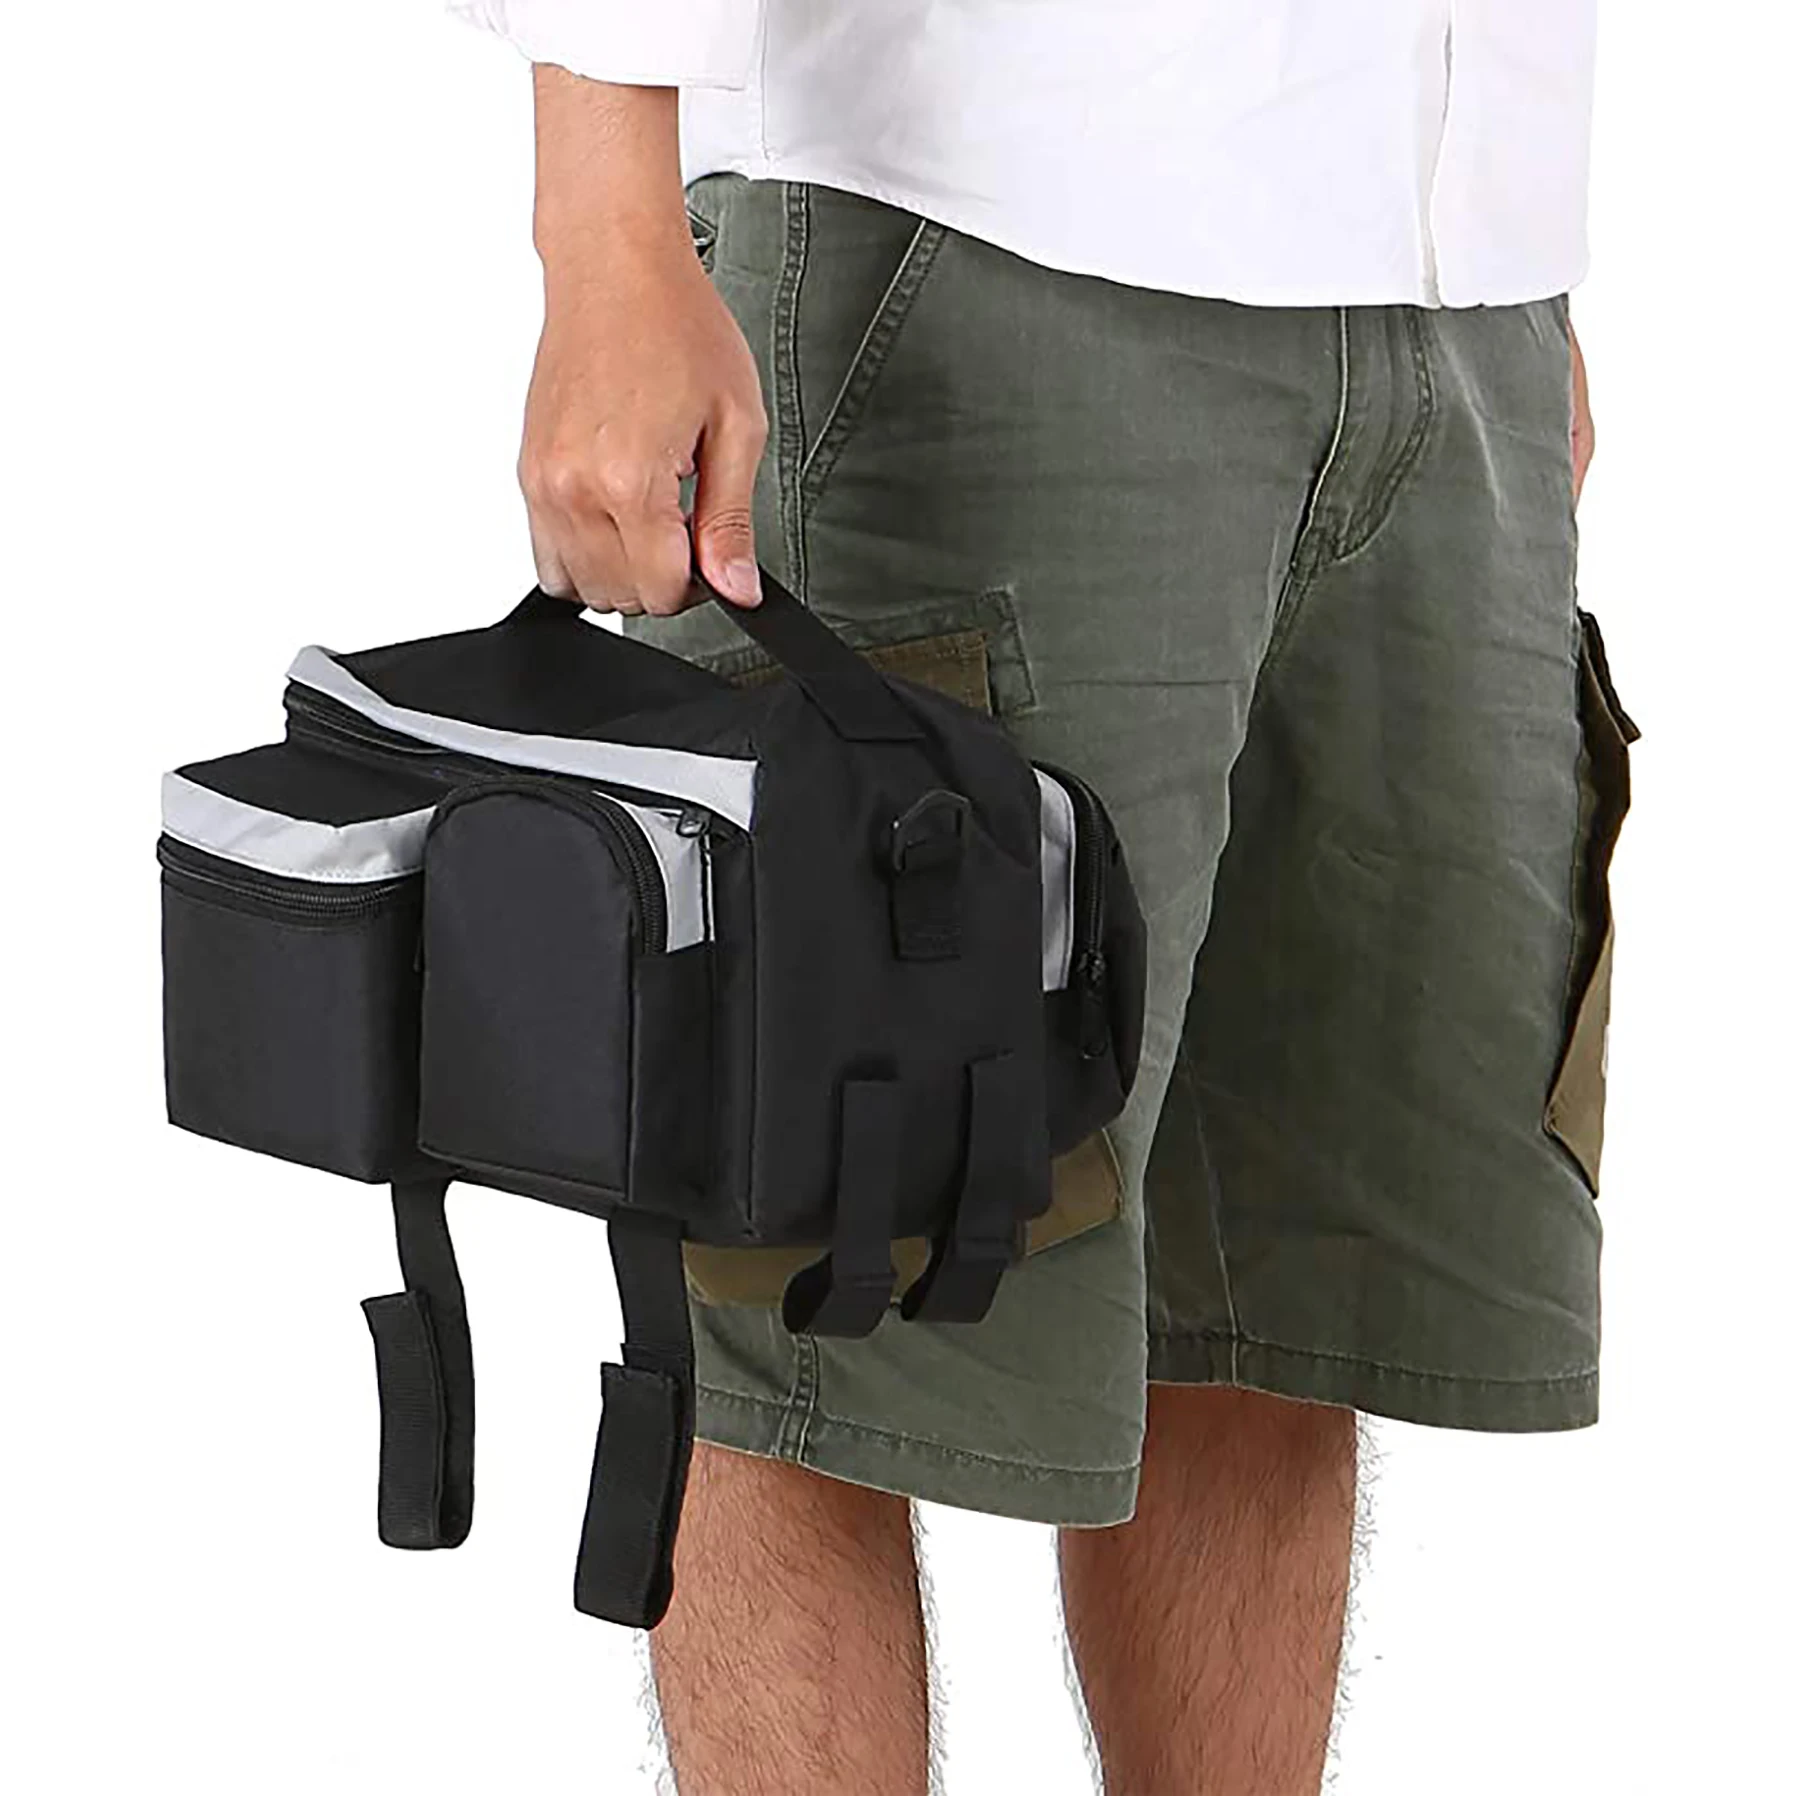 Bicycle Rear Seat Bag Multifunctional Cycling Bike Rear Rack Trunk Pannier Luggage Carrier Bag Handbag Shoulder Bag